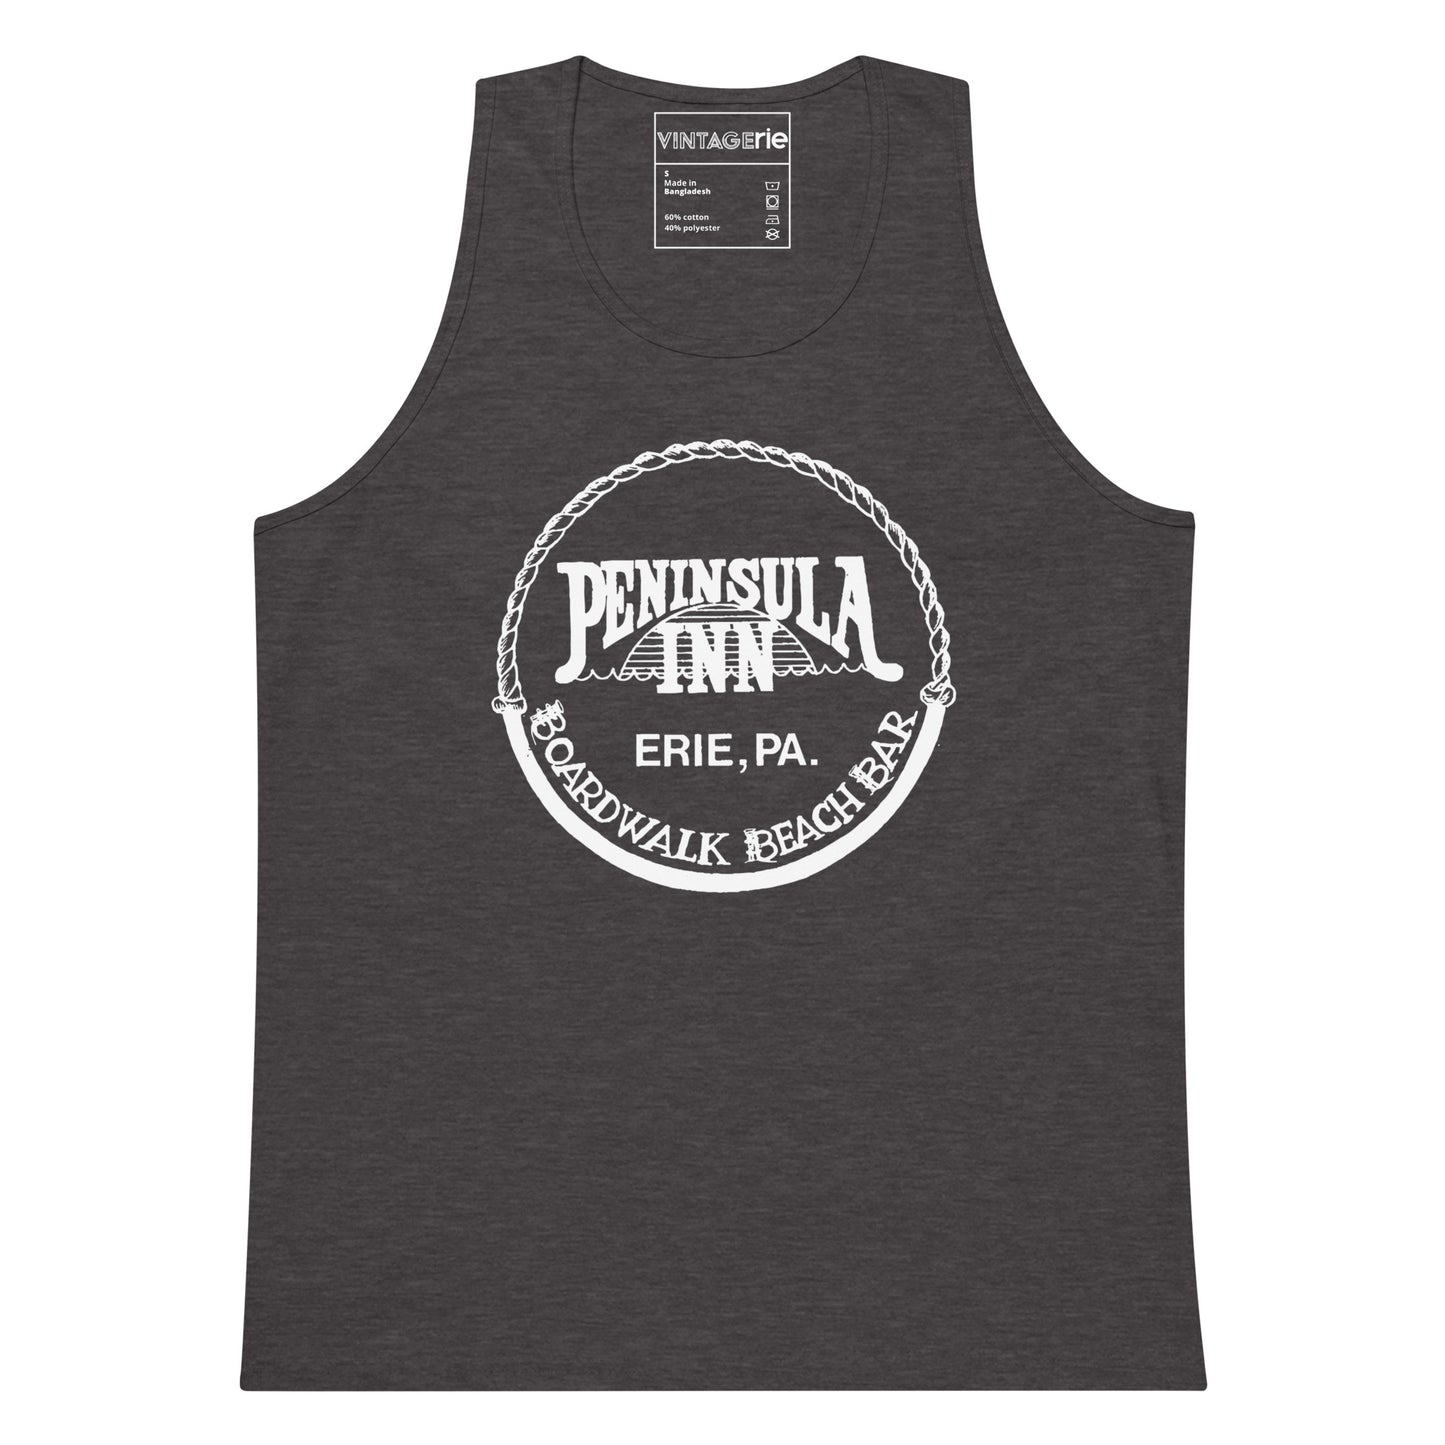 Peninsula Inn (White Logo) Men’s premium tank top